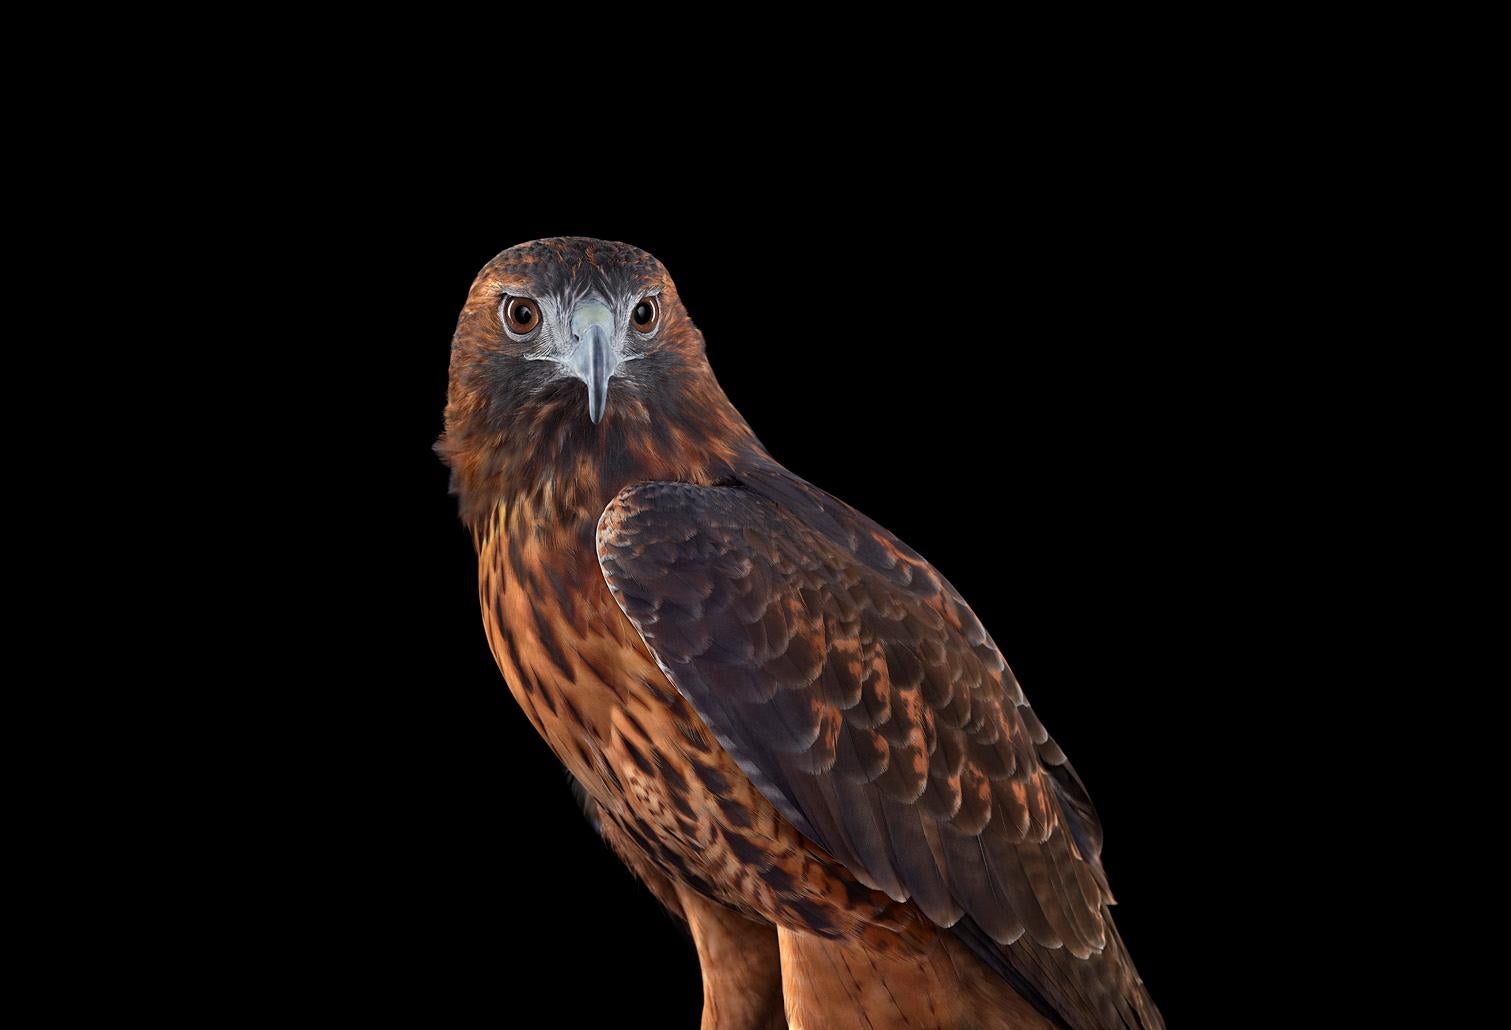 Brad Wilson Color Photograph - Red Tailed Hawk #1, Espanola, NM, 2011